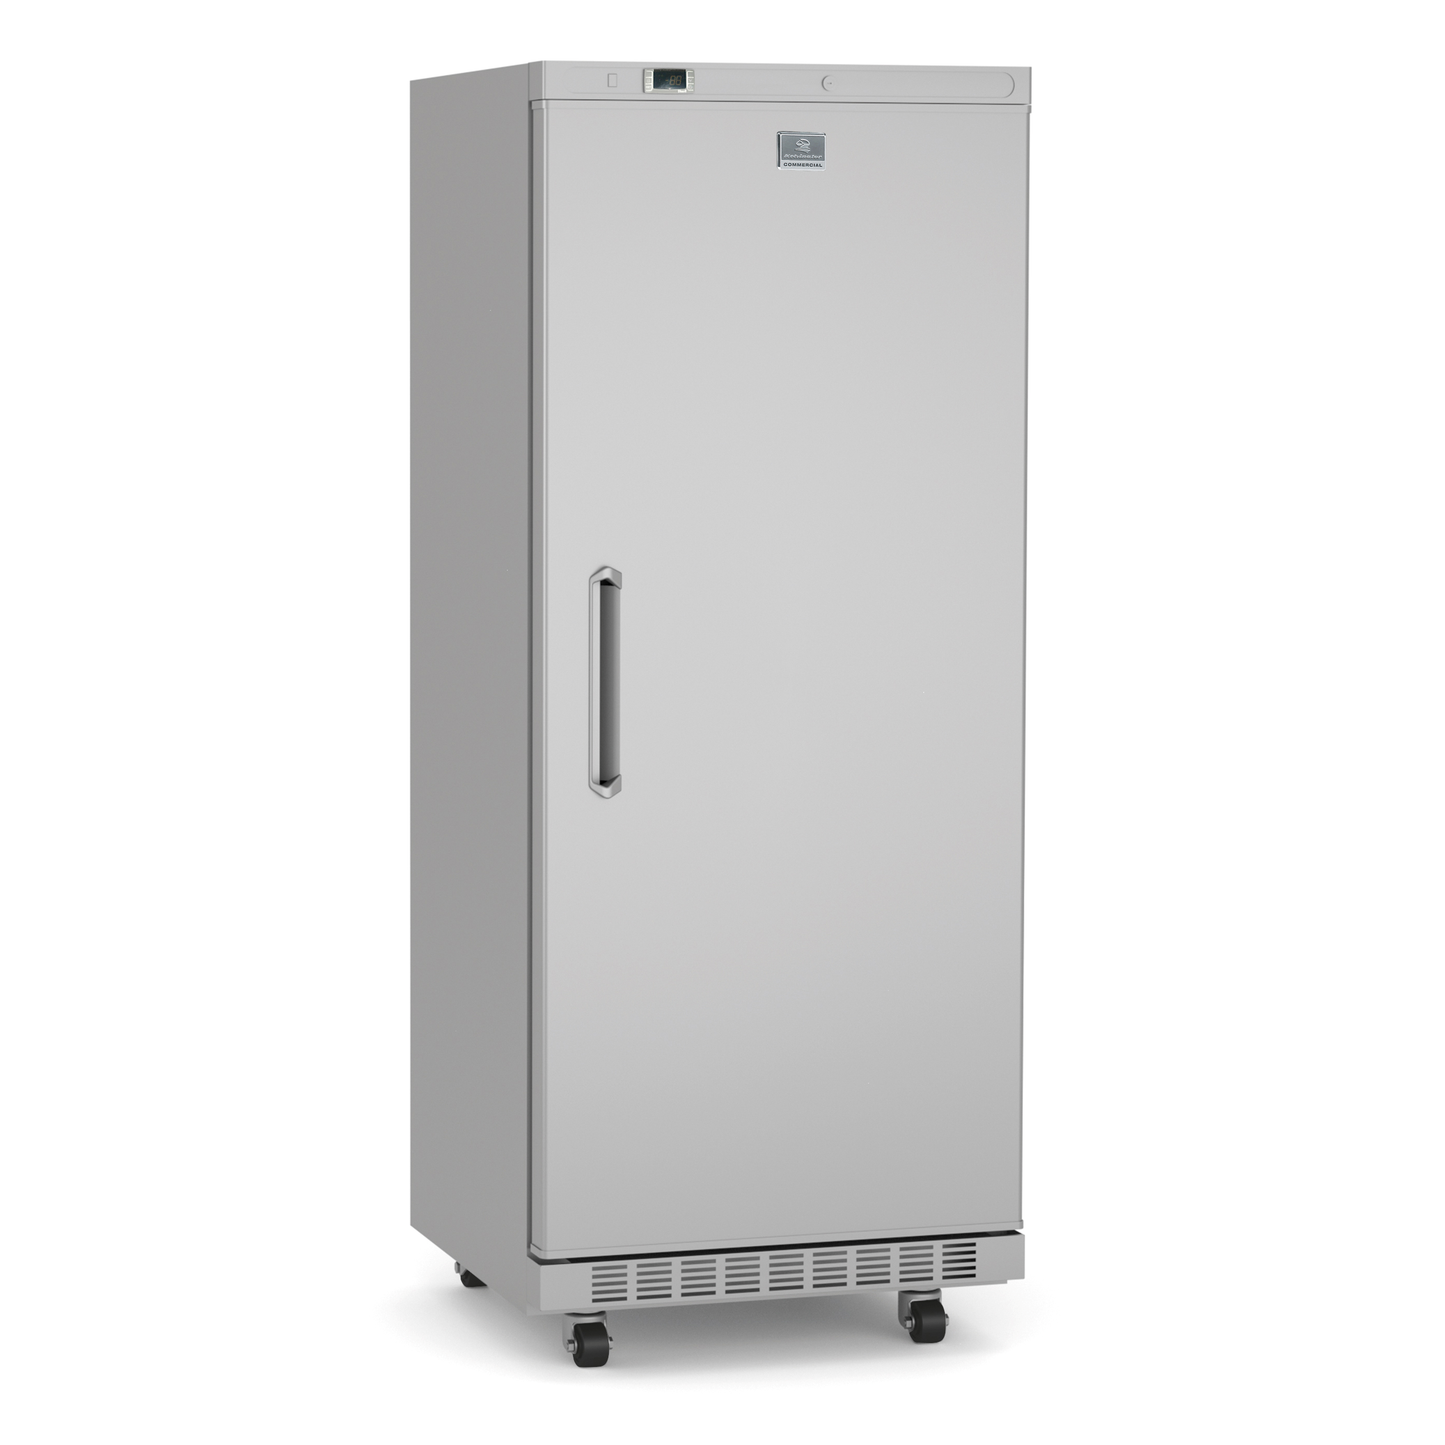 Reach-in Freezer Kelvinator Commercial Model KCHRI25R1DFE